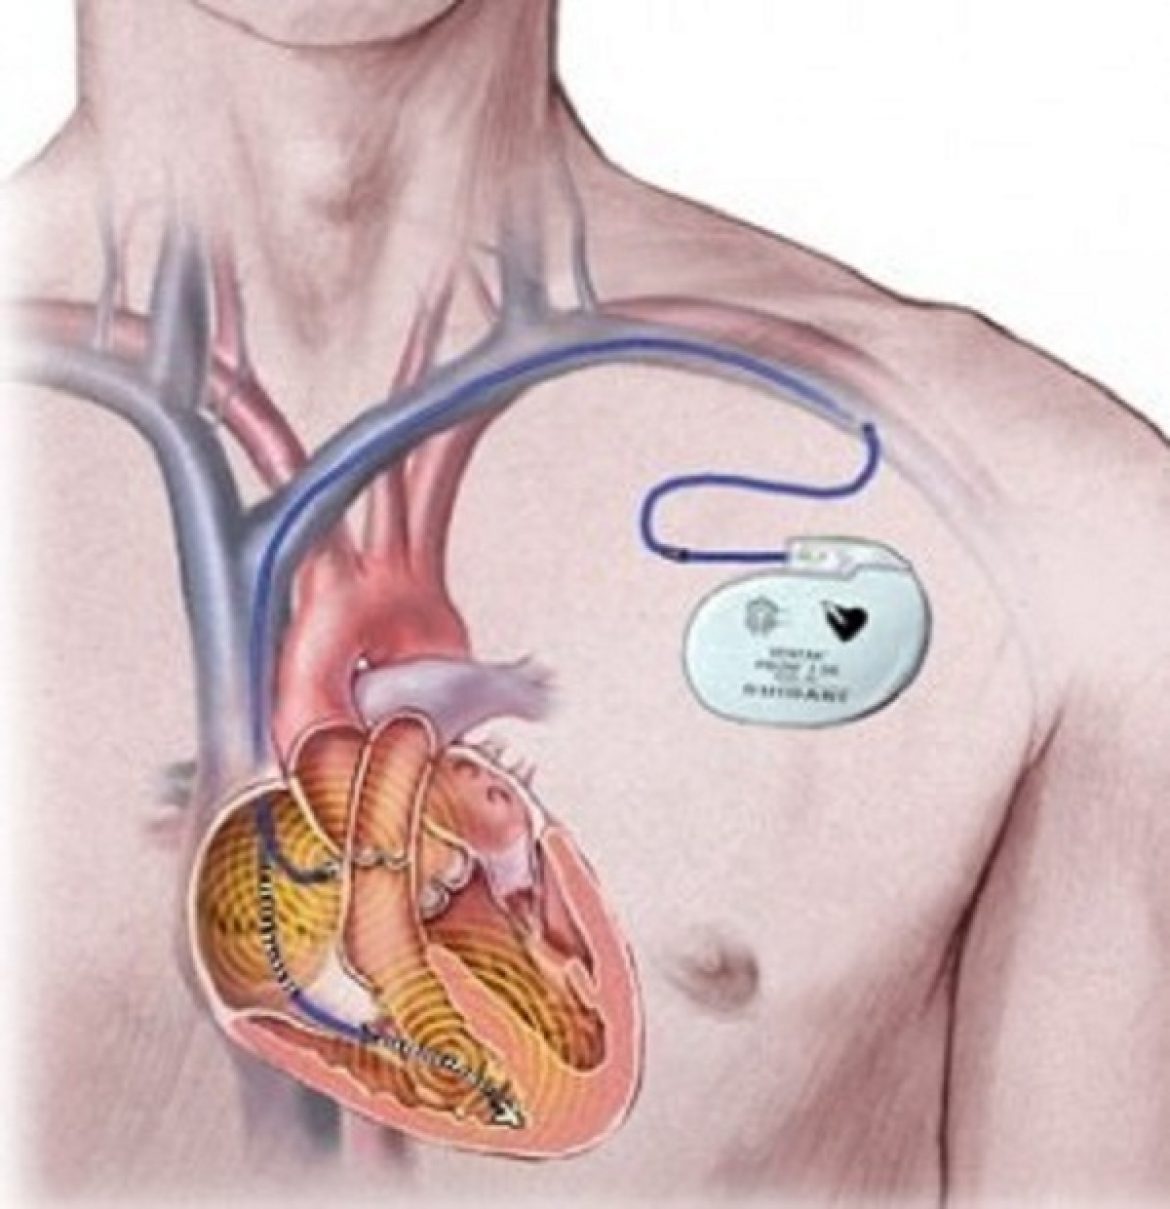 Сколько живут с кардиостимулятором. Кардиостимулятор сердца. Кардиостимулятор брадикардия. Имплантируемый кардиовертер-дефибриллятор. Кардиостимулятор сердца имплантируемый.